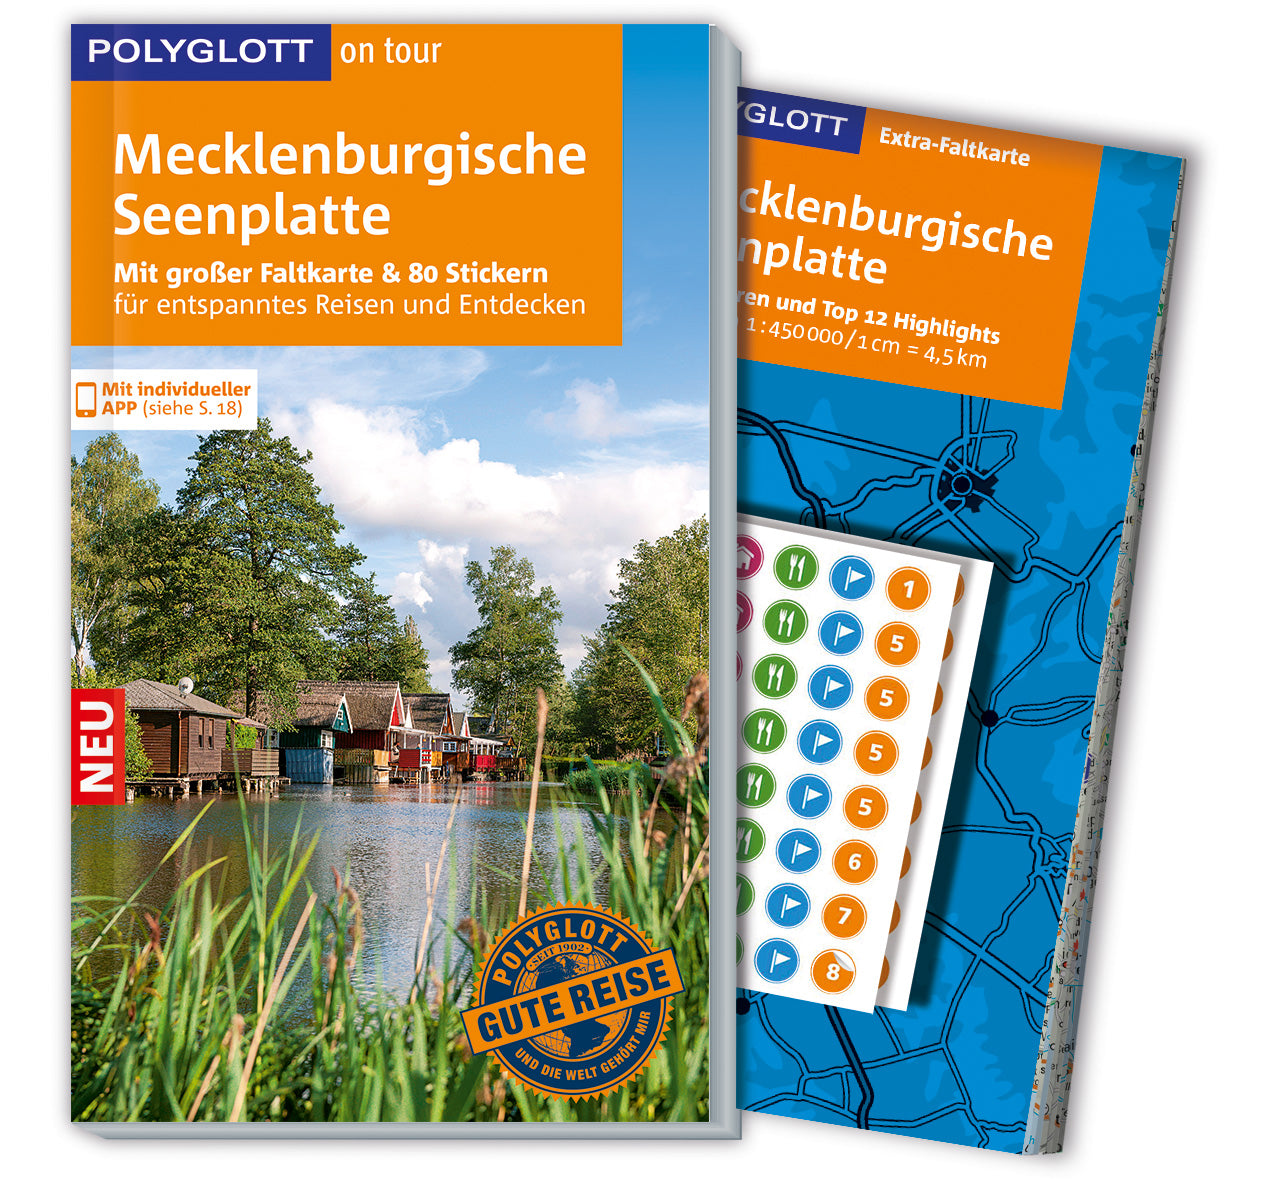 Reisgids Mecklenburgische Seenplatte - Polyglott on tour (2015)